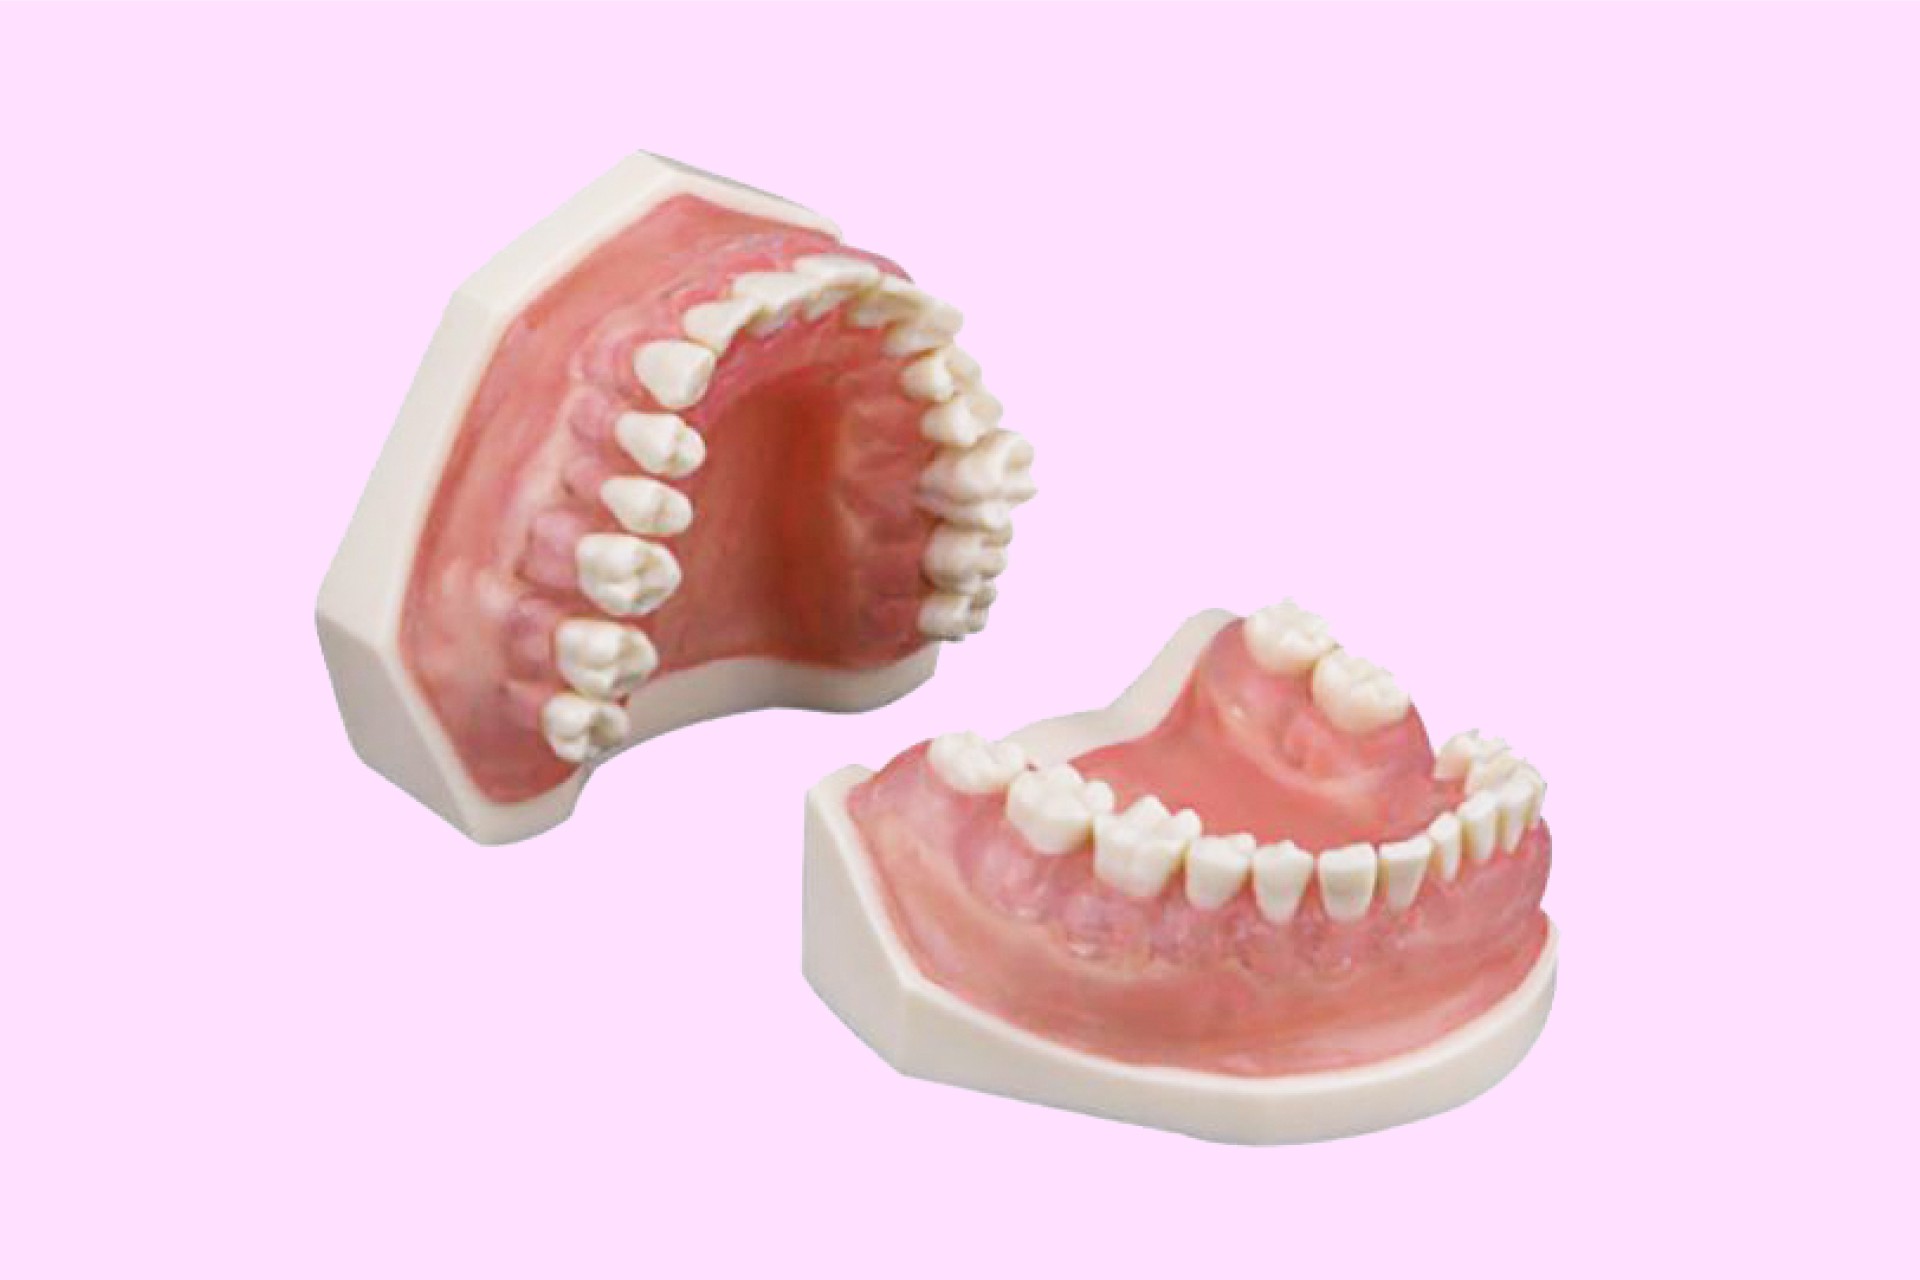 Periodontics Training Arch with Translucent Pink Soft Gum